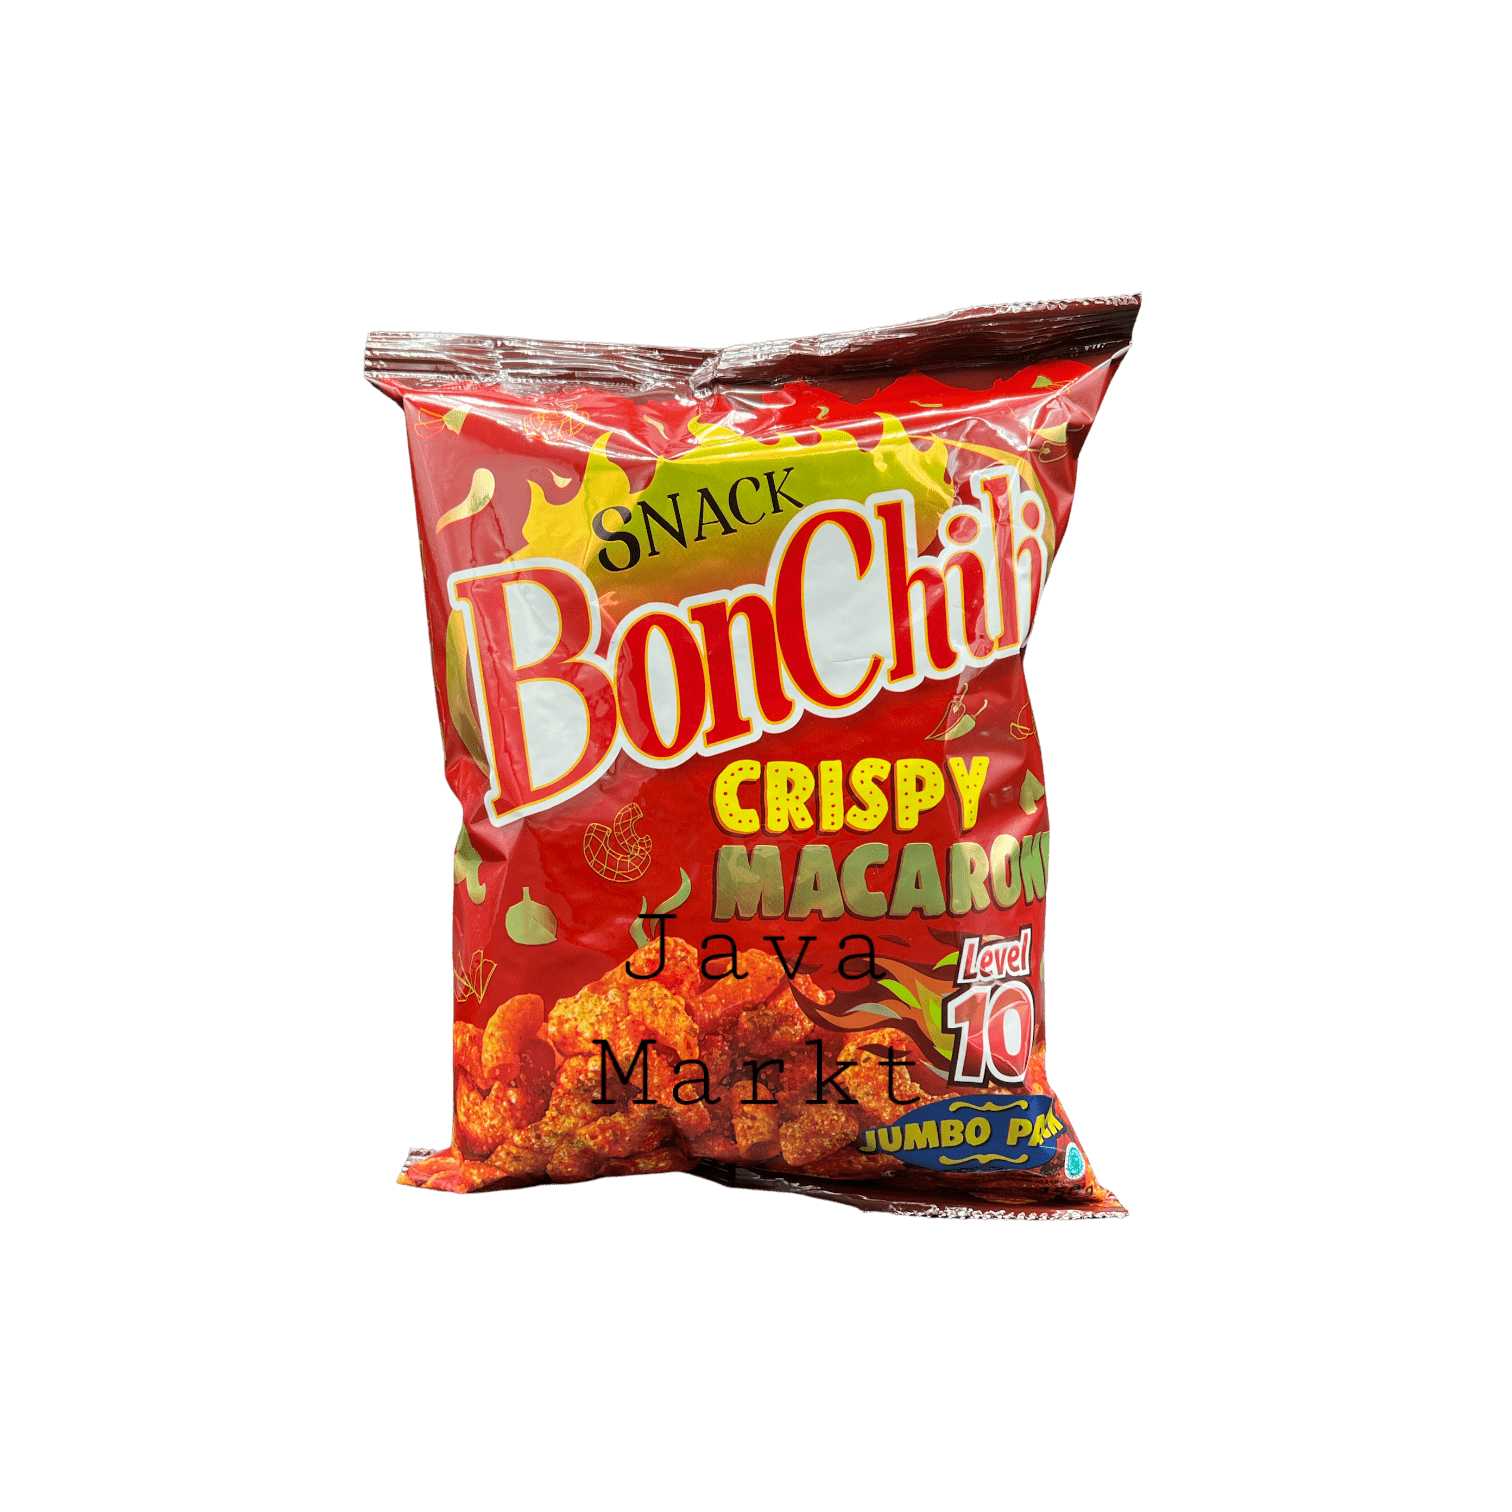 BonCabe Makaroni Crispy Snack Level 10 - Java Markt